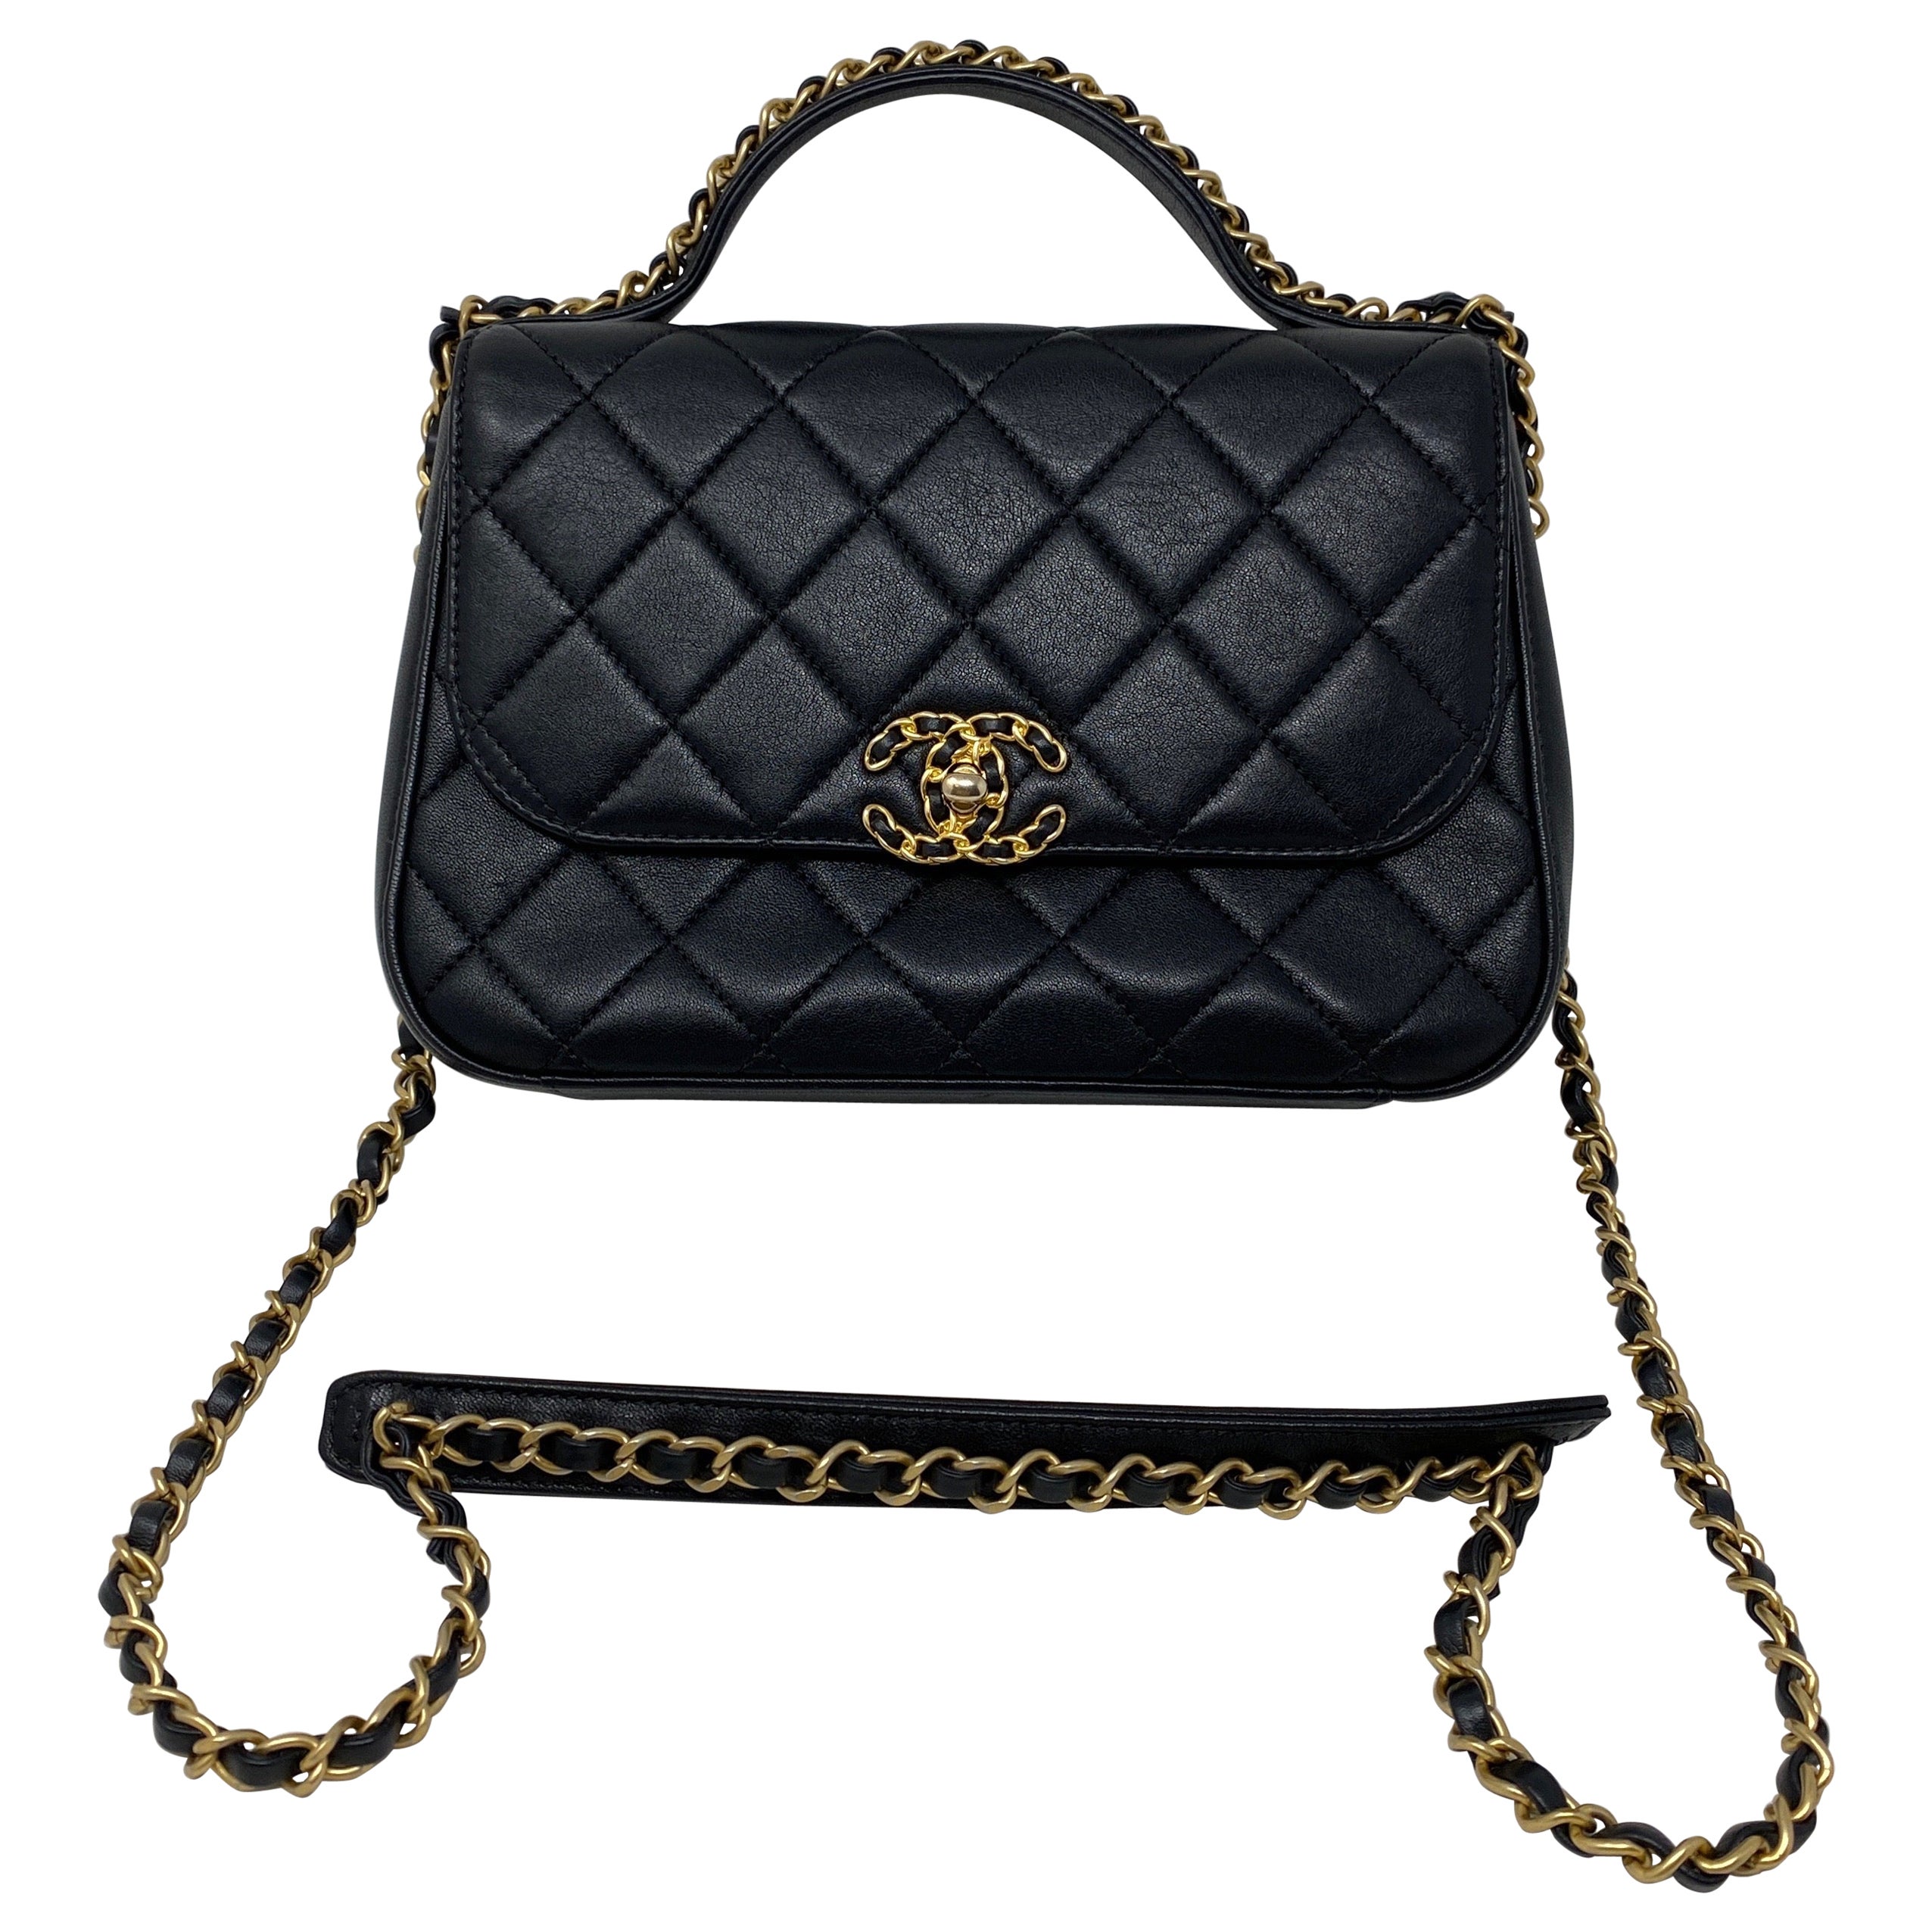 Chanel Top Handle Black Chain Bag